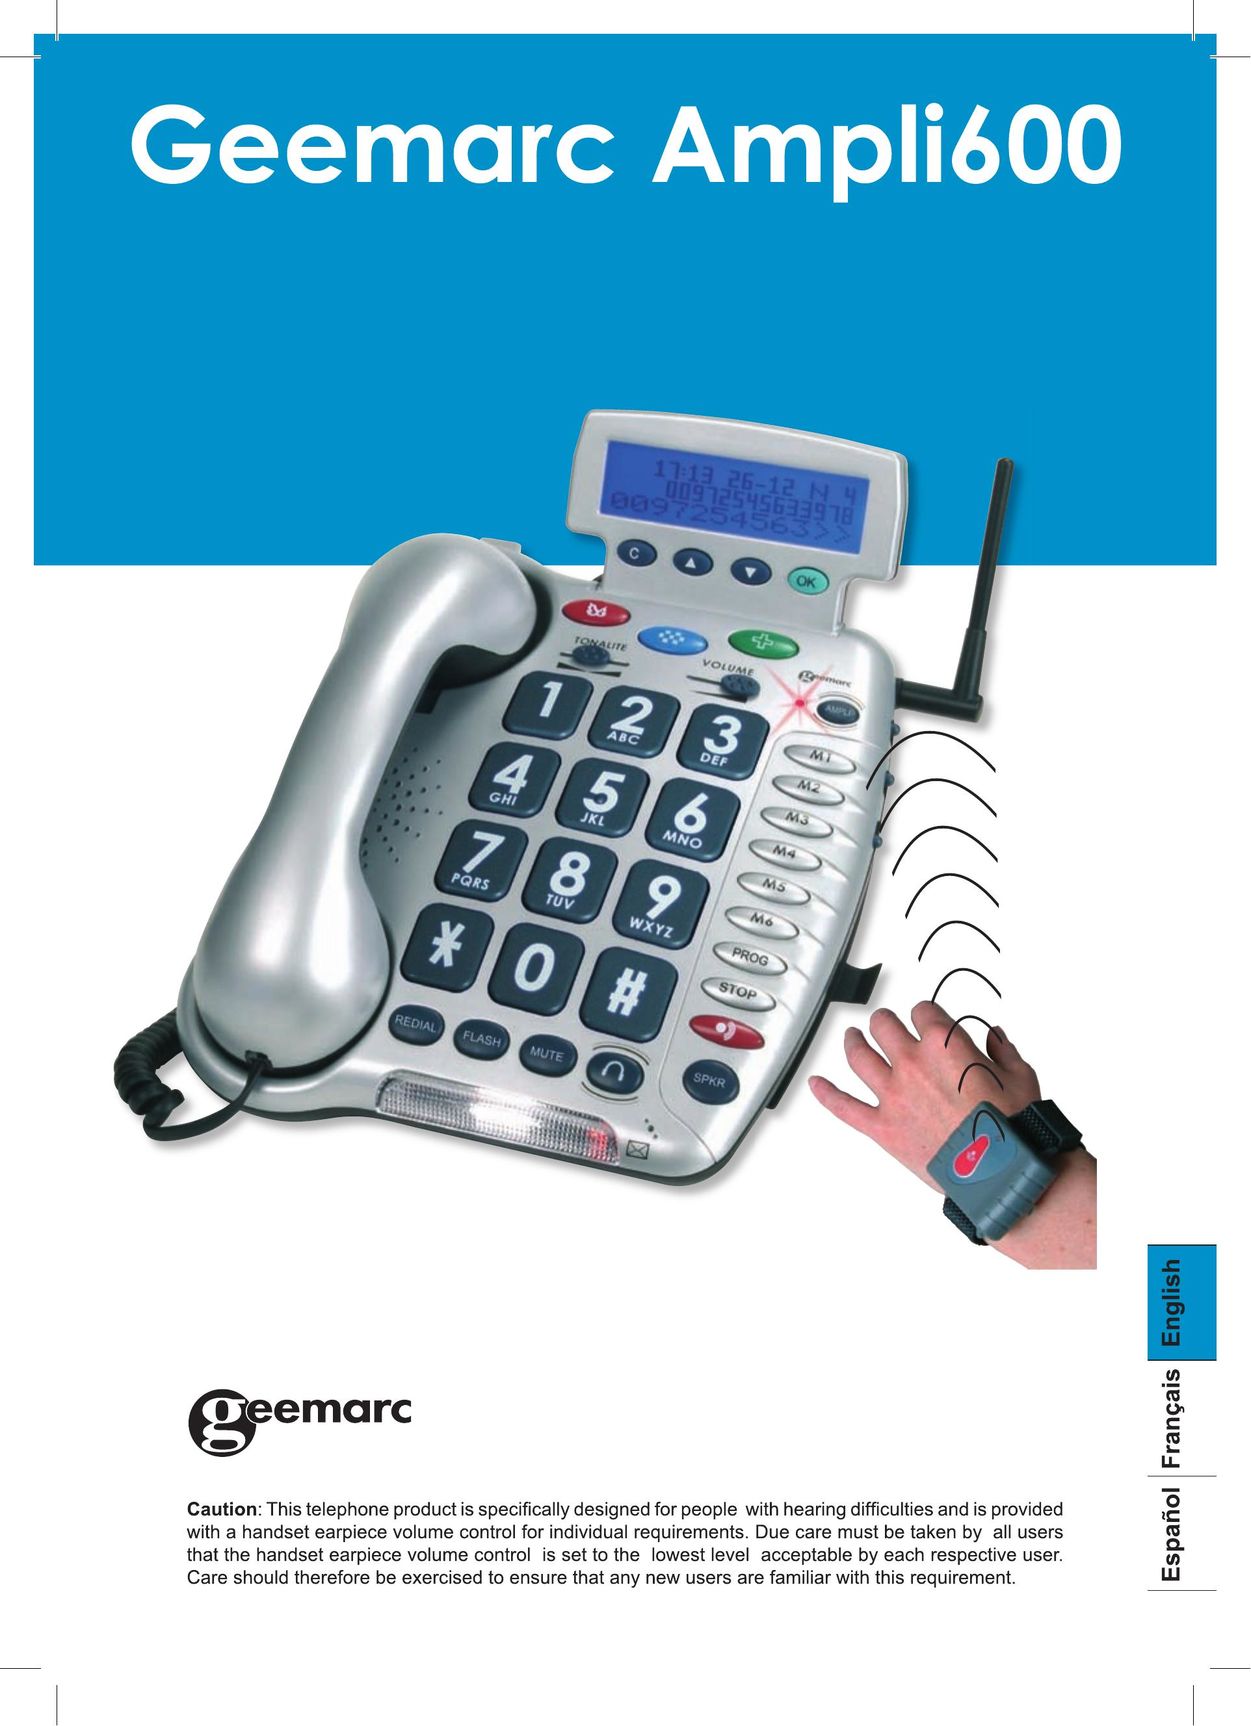 Geemarc AMPLI600 Telephone User Manual